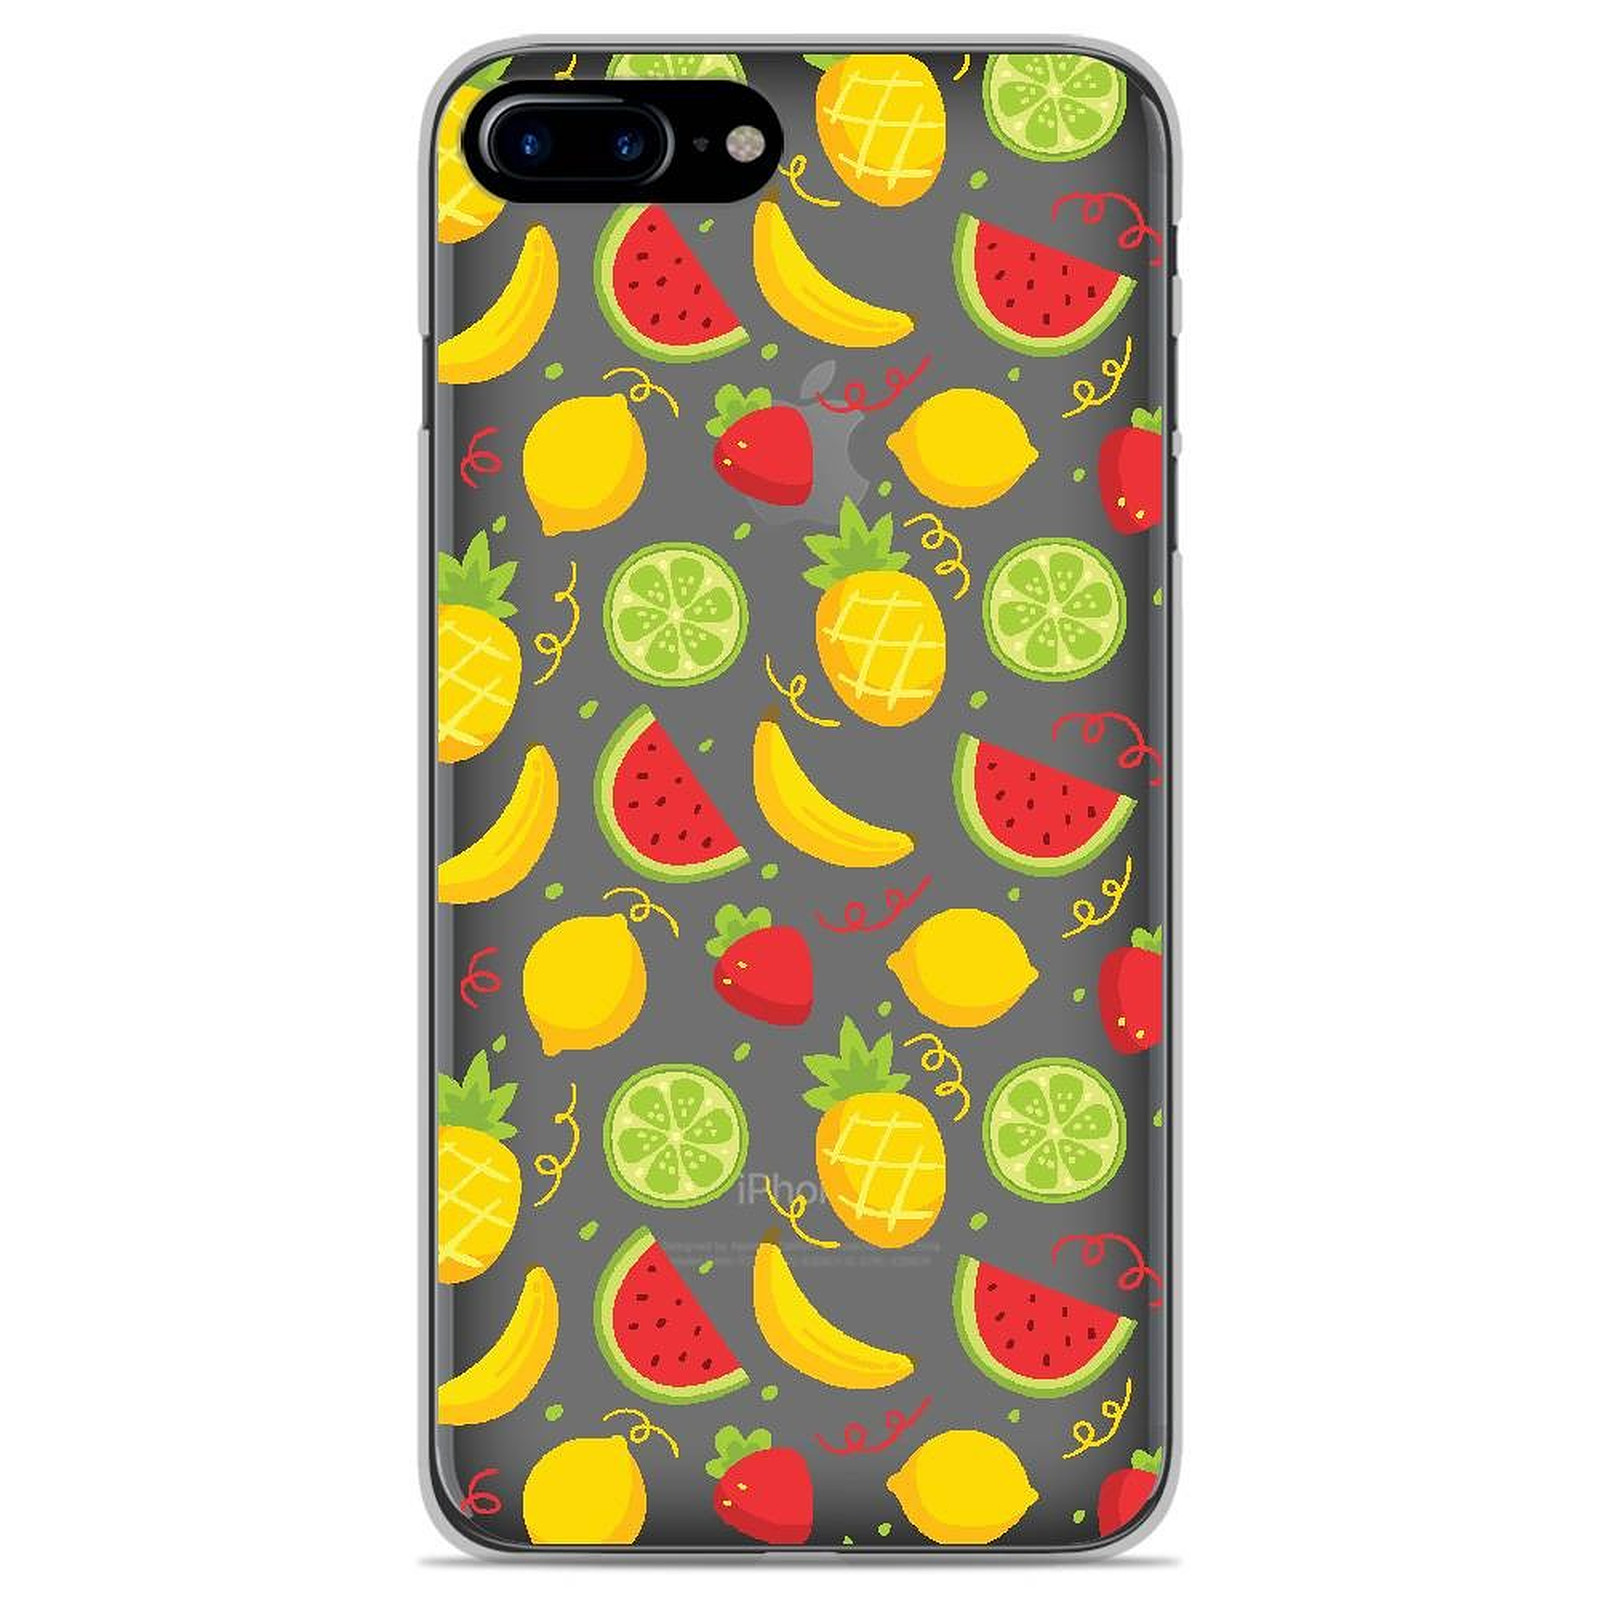 1001 Coques Coque silicone gel Apple iPhone 8 Plus motif Fruits tropicaux - Coque telephone 1001Coques